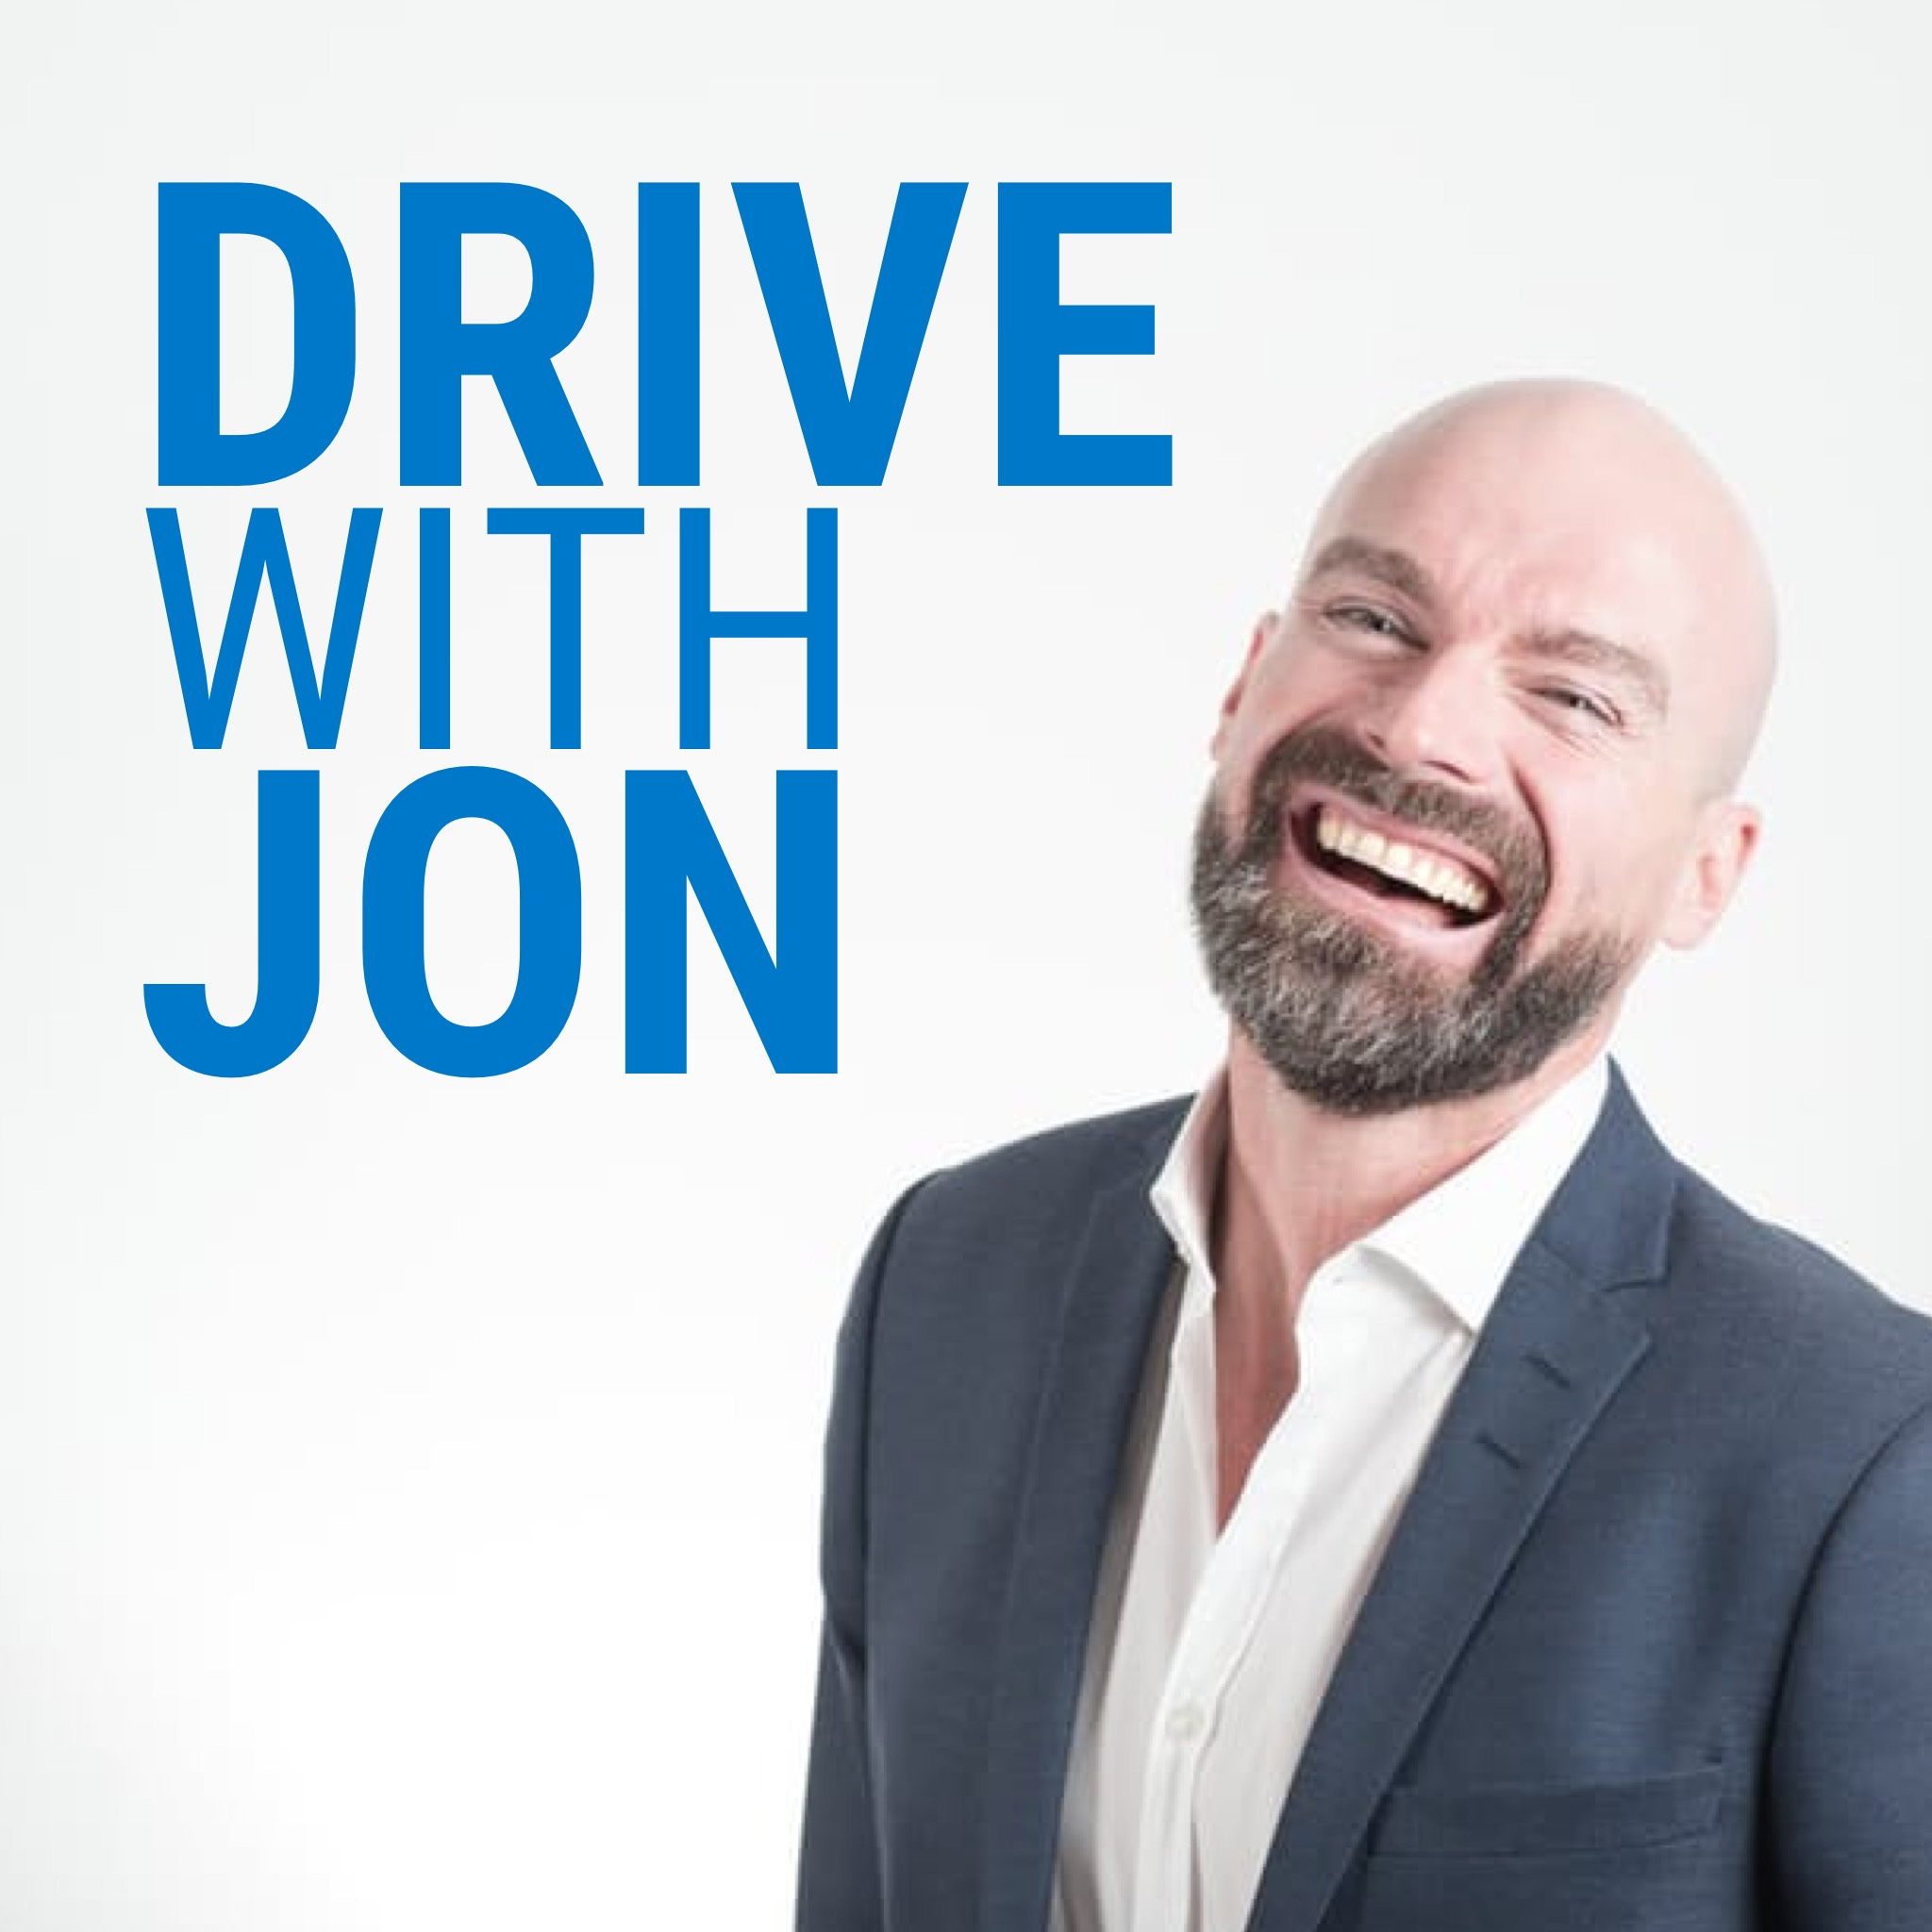 7:40 pm - Drive with Jon